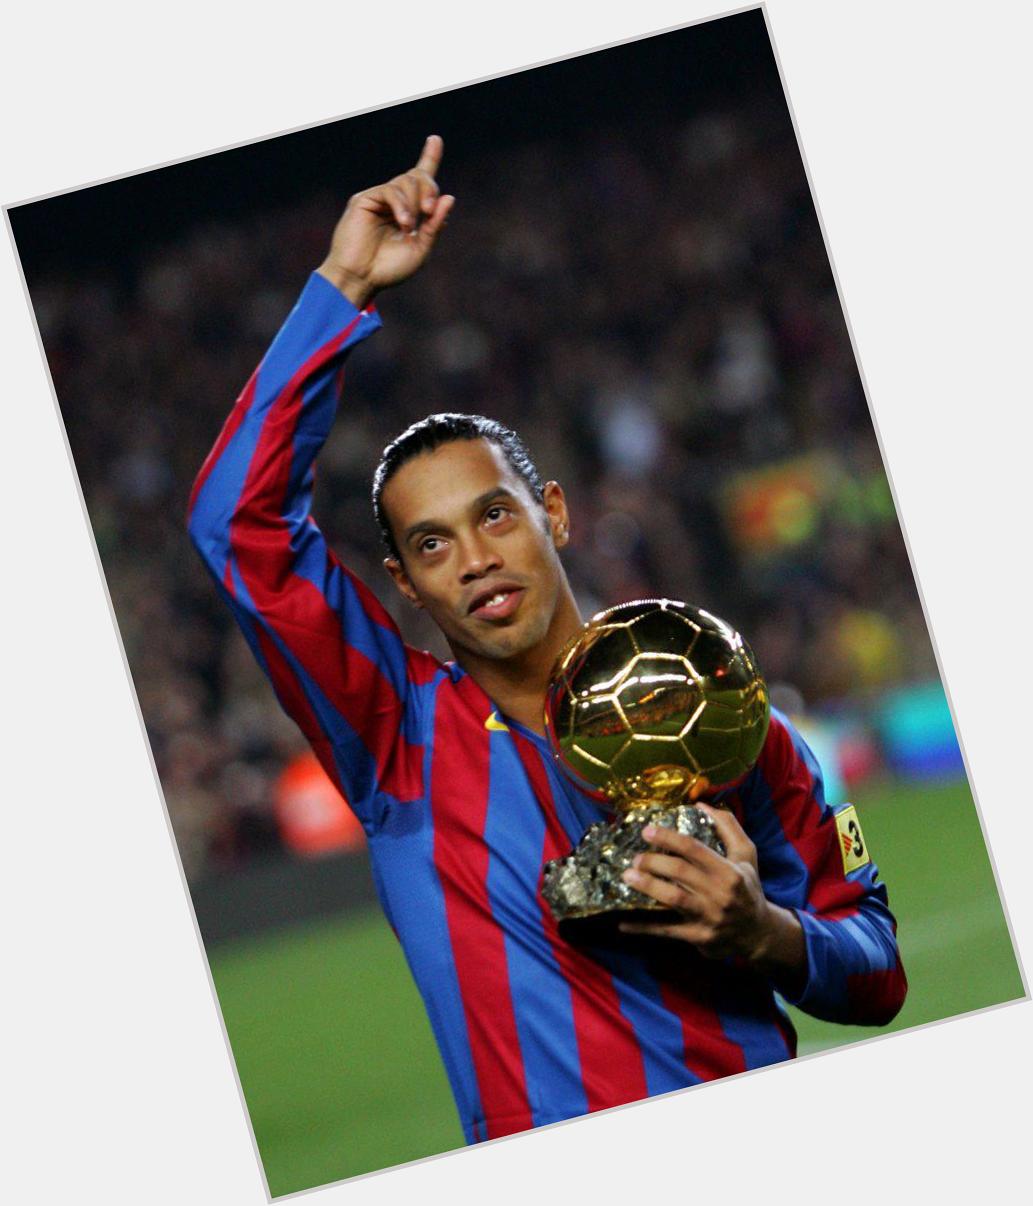 Ronaldinho Gaúcho winning on and off the field. Happy birthday legend! 